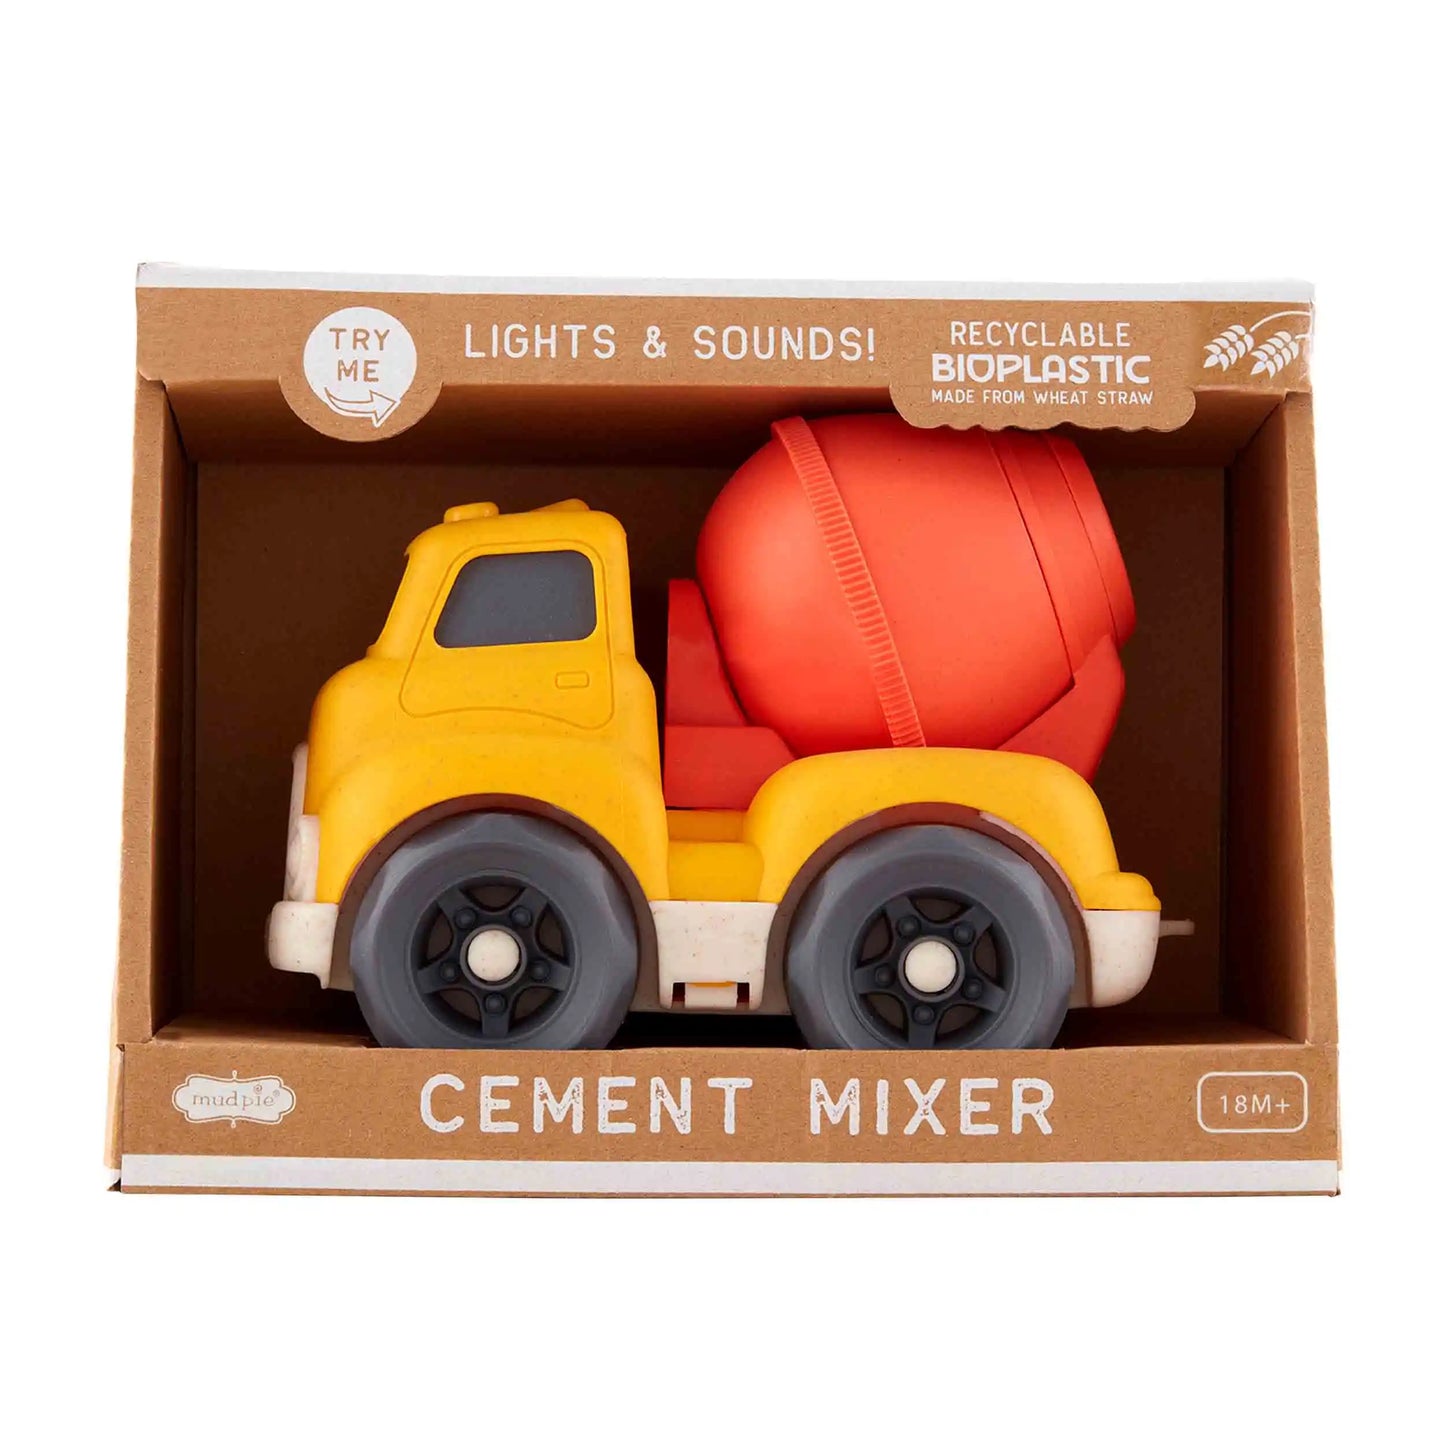 Cement Mixer Lights & Sounds Vehicle